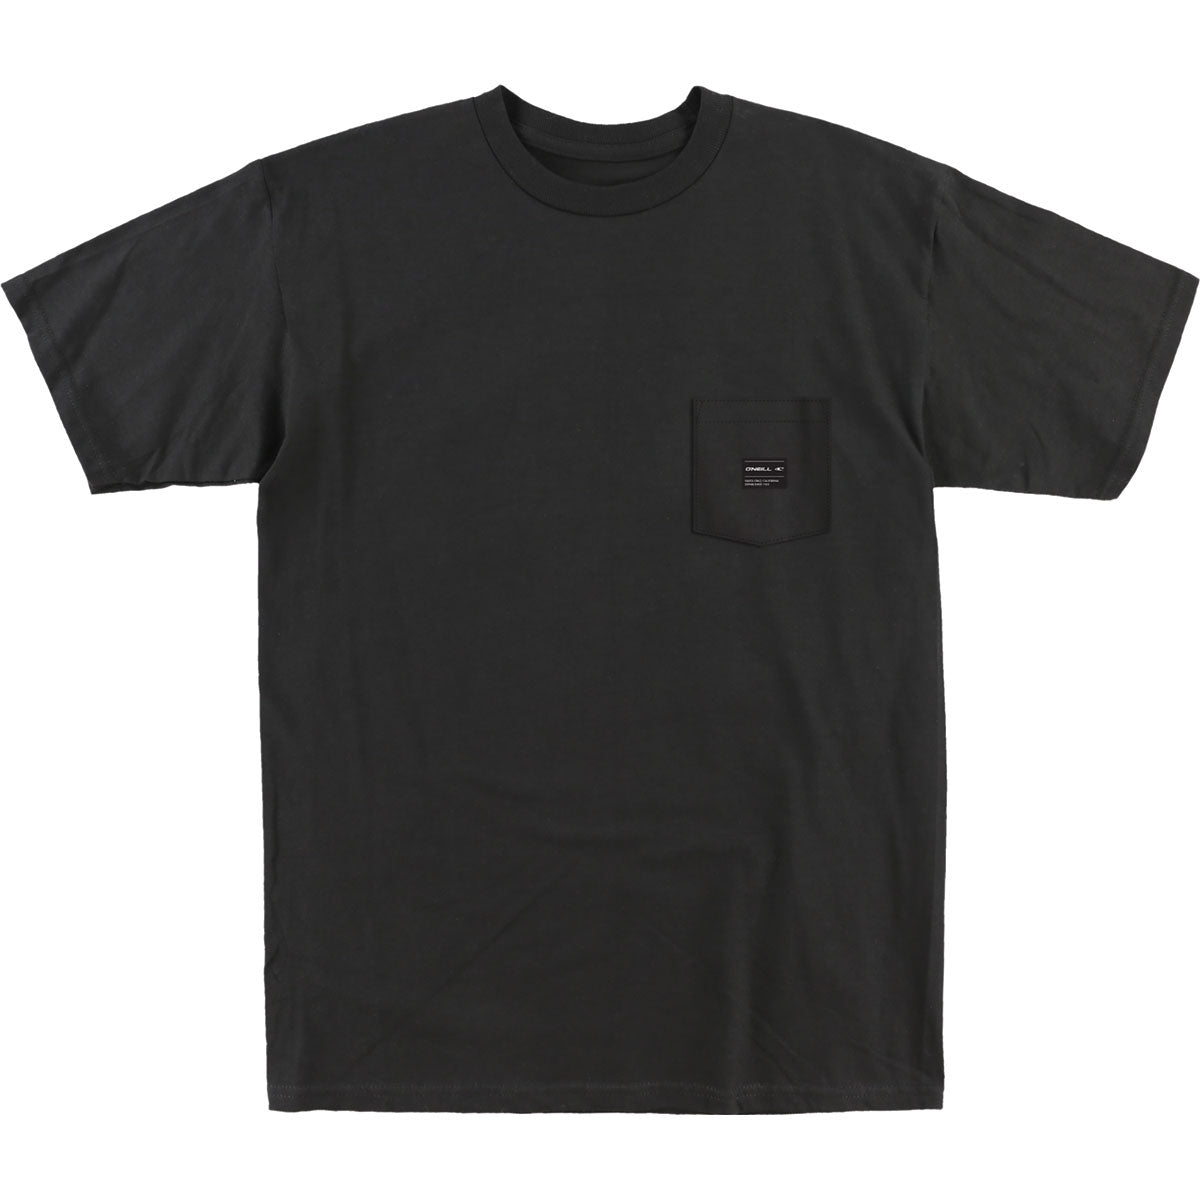 O'Neill Stitched Men's Short-Sleeve Shirts - Black